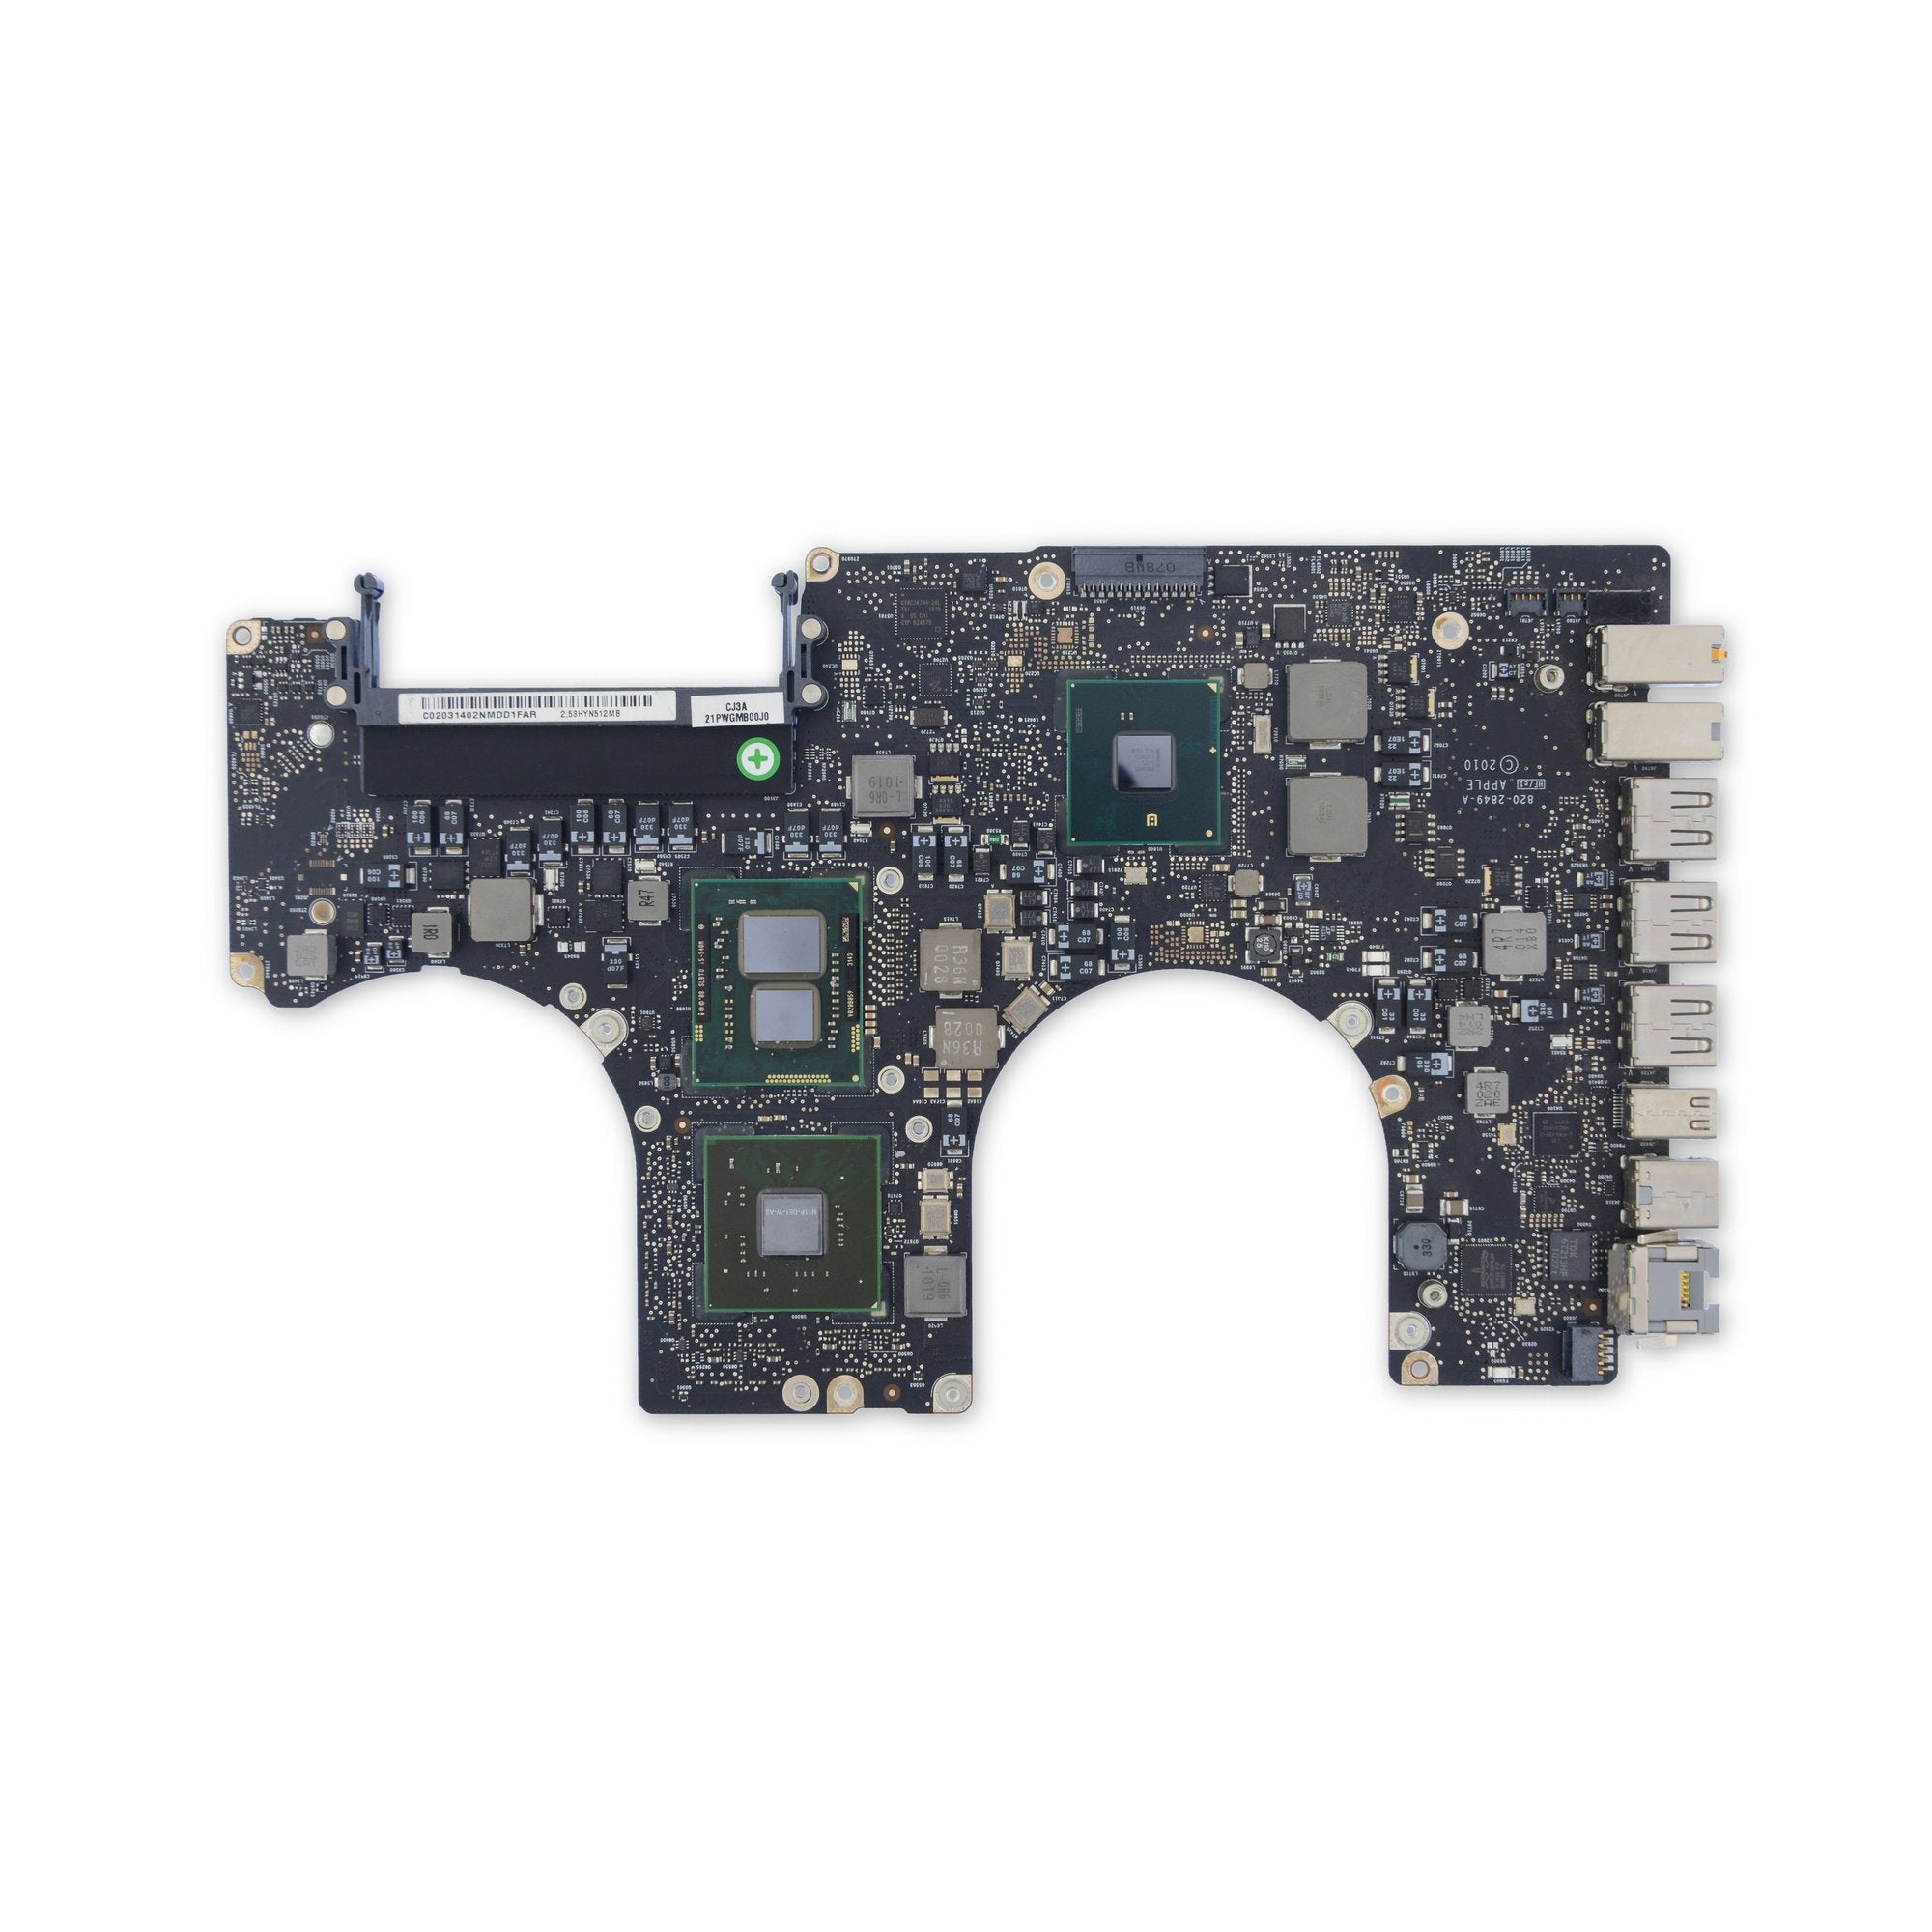 MacBook Pro 17" Unibody (Mid 2010) 2.53 GHz Logic Board Used